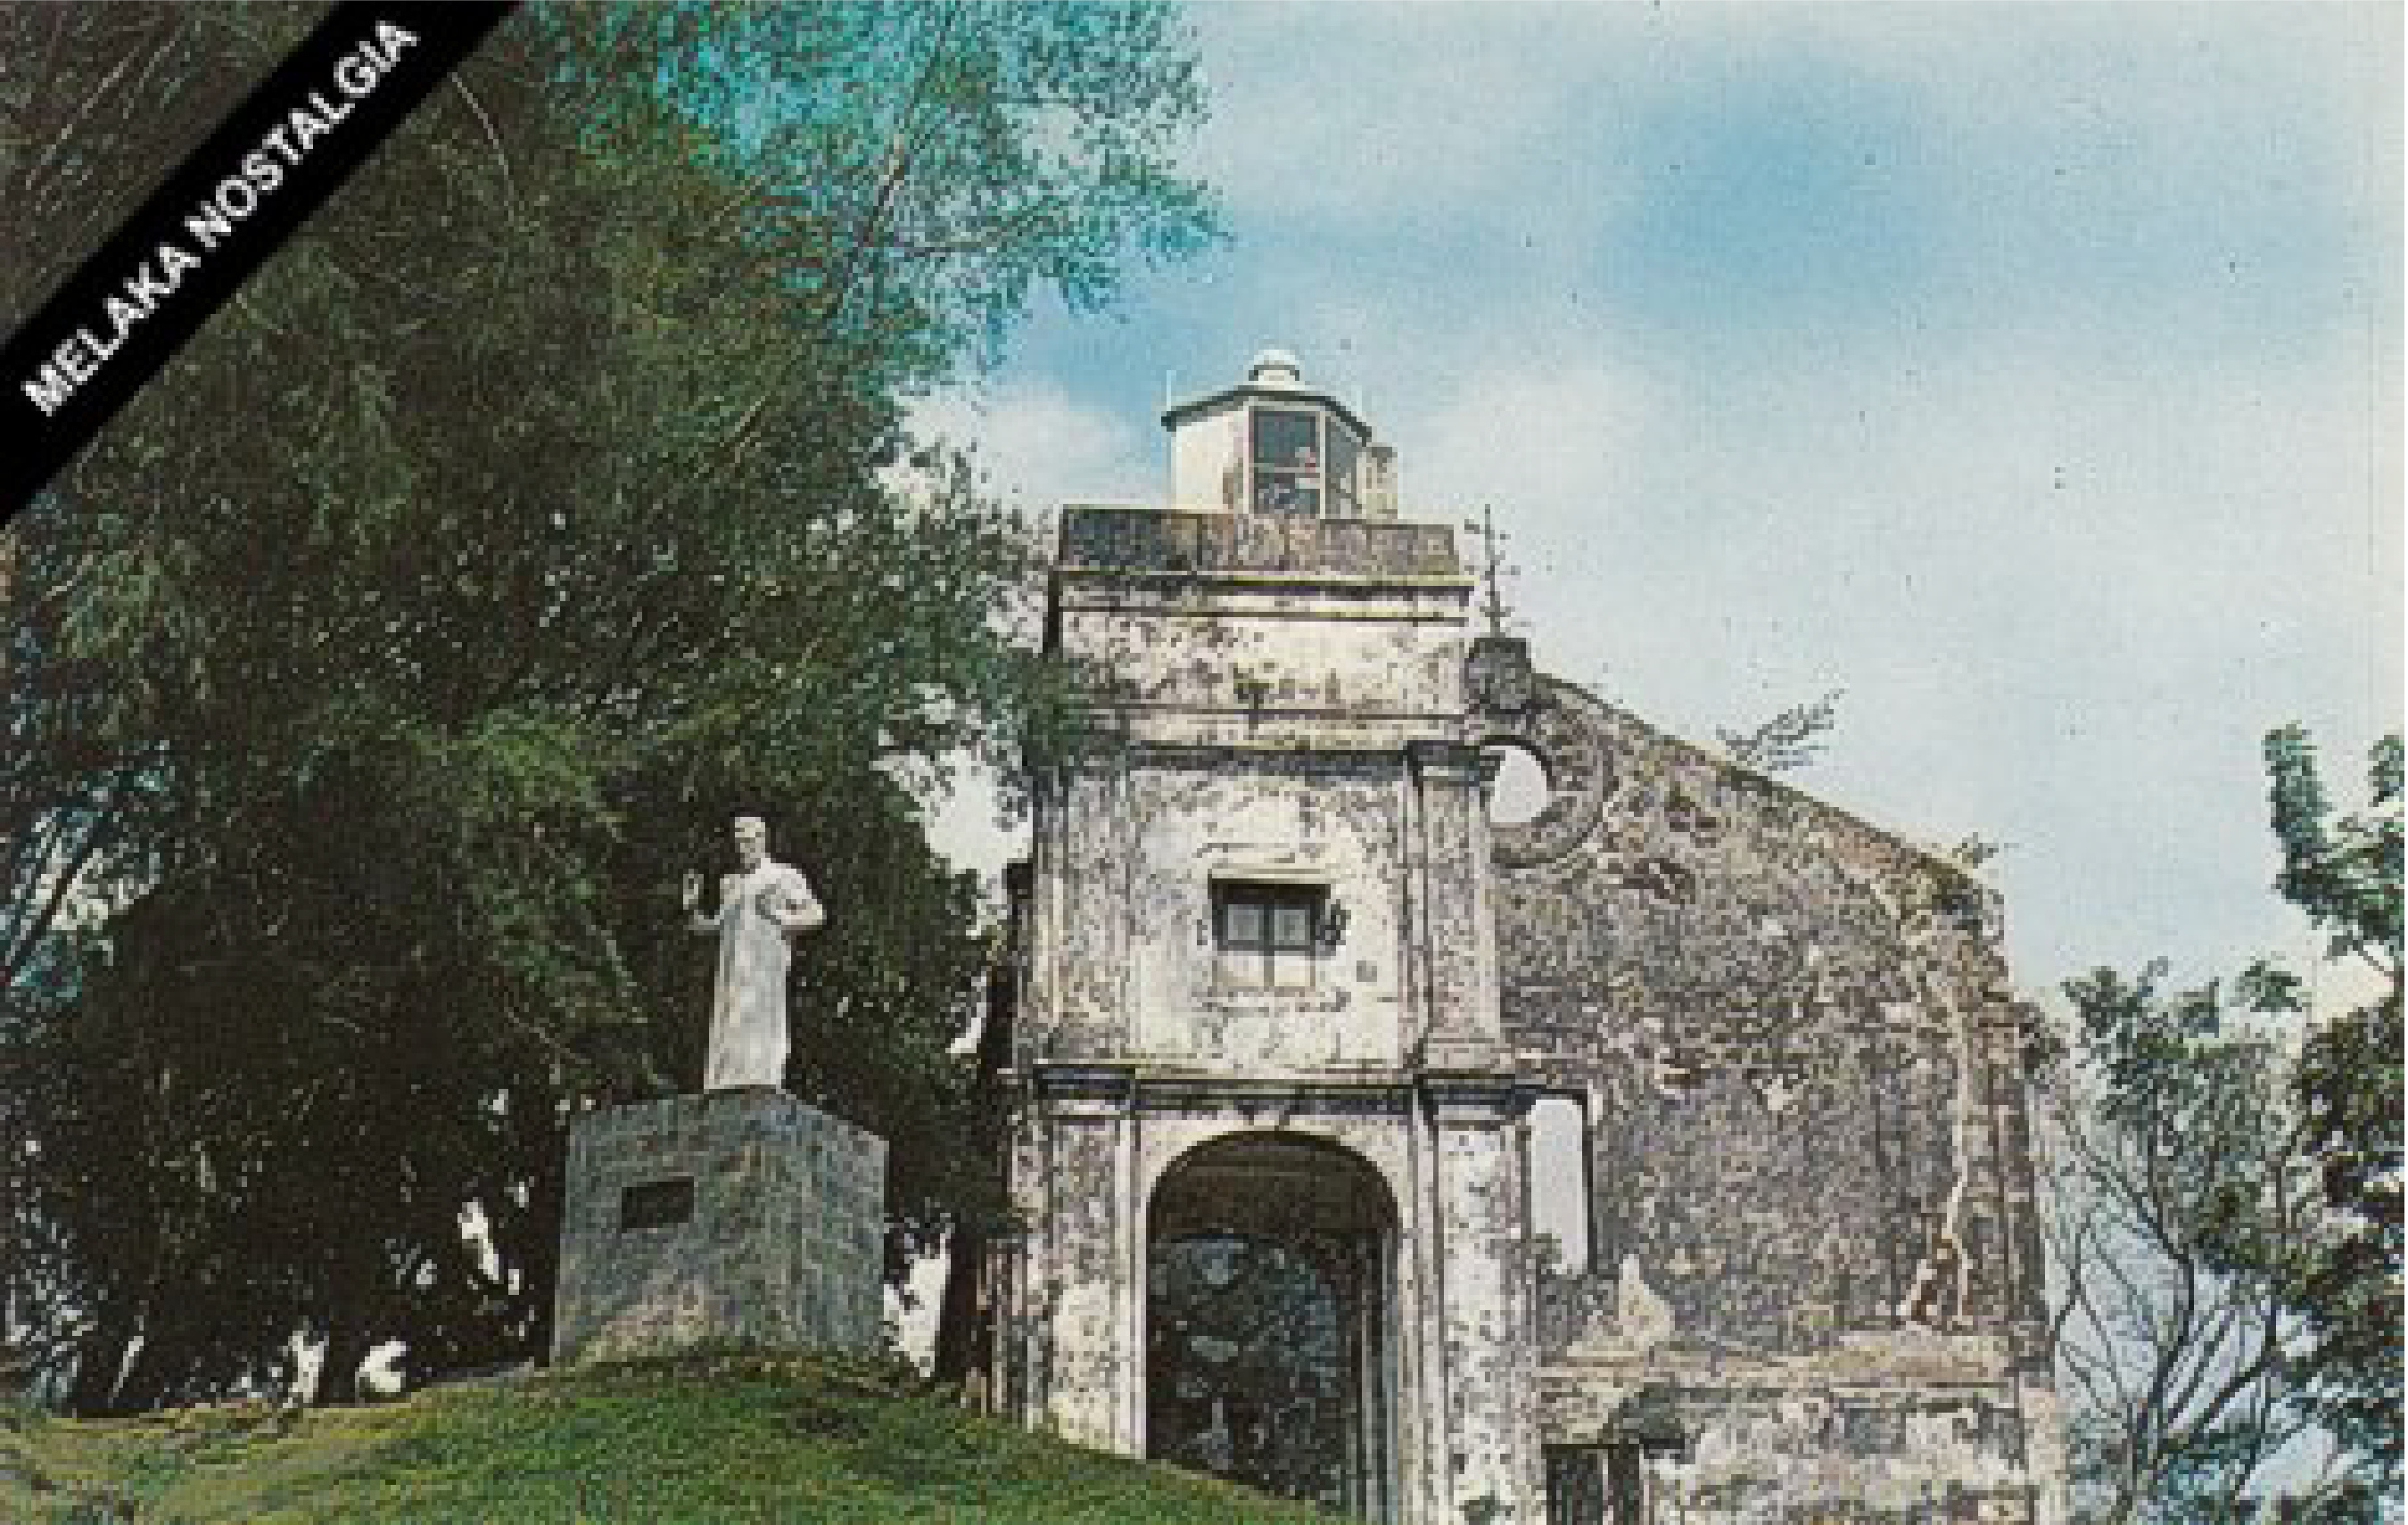 The ruins of St. Paul's Church circa 1952 (source: Melaka Nostalgia)